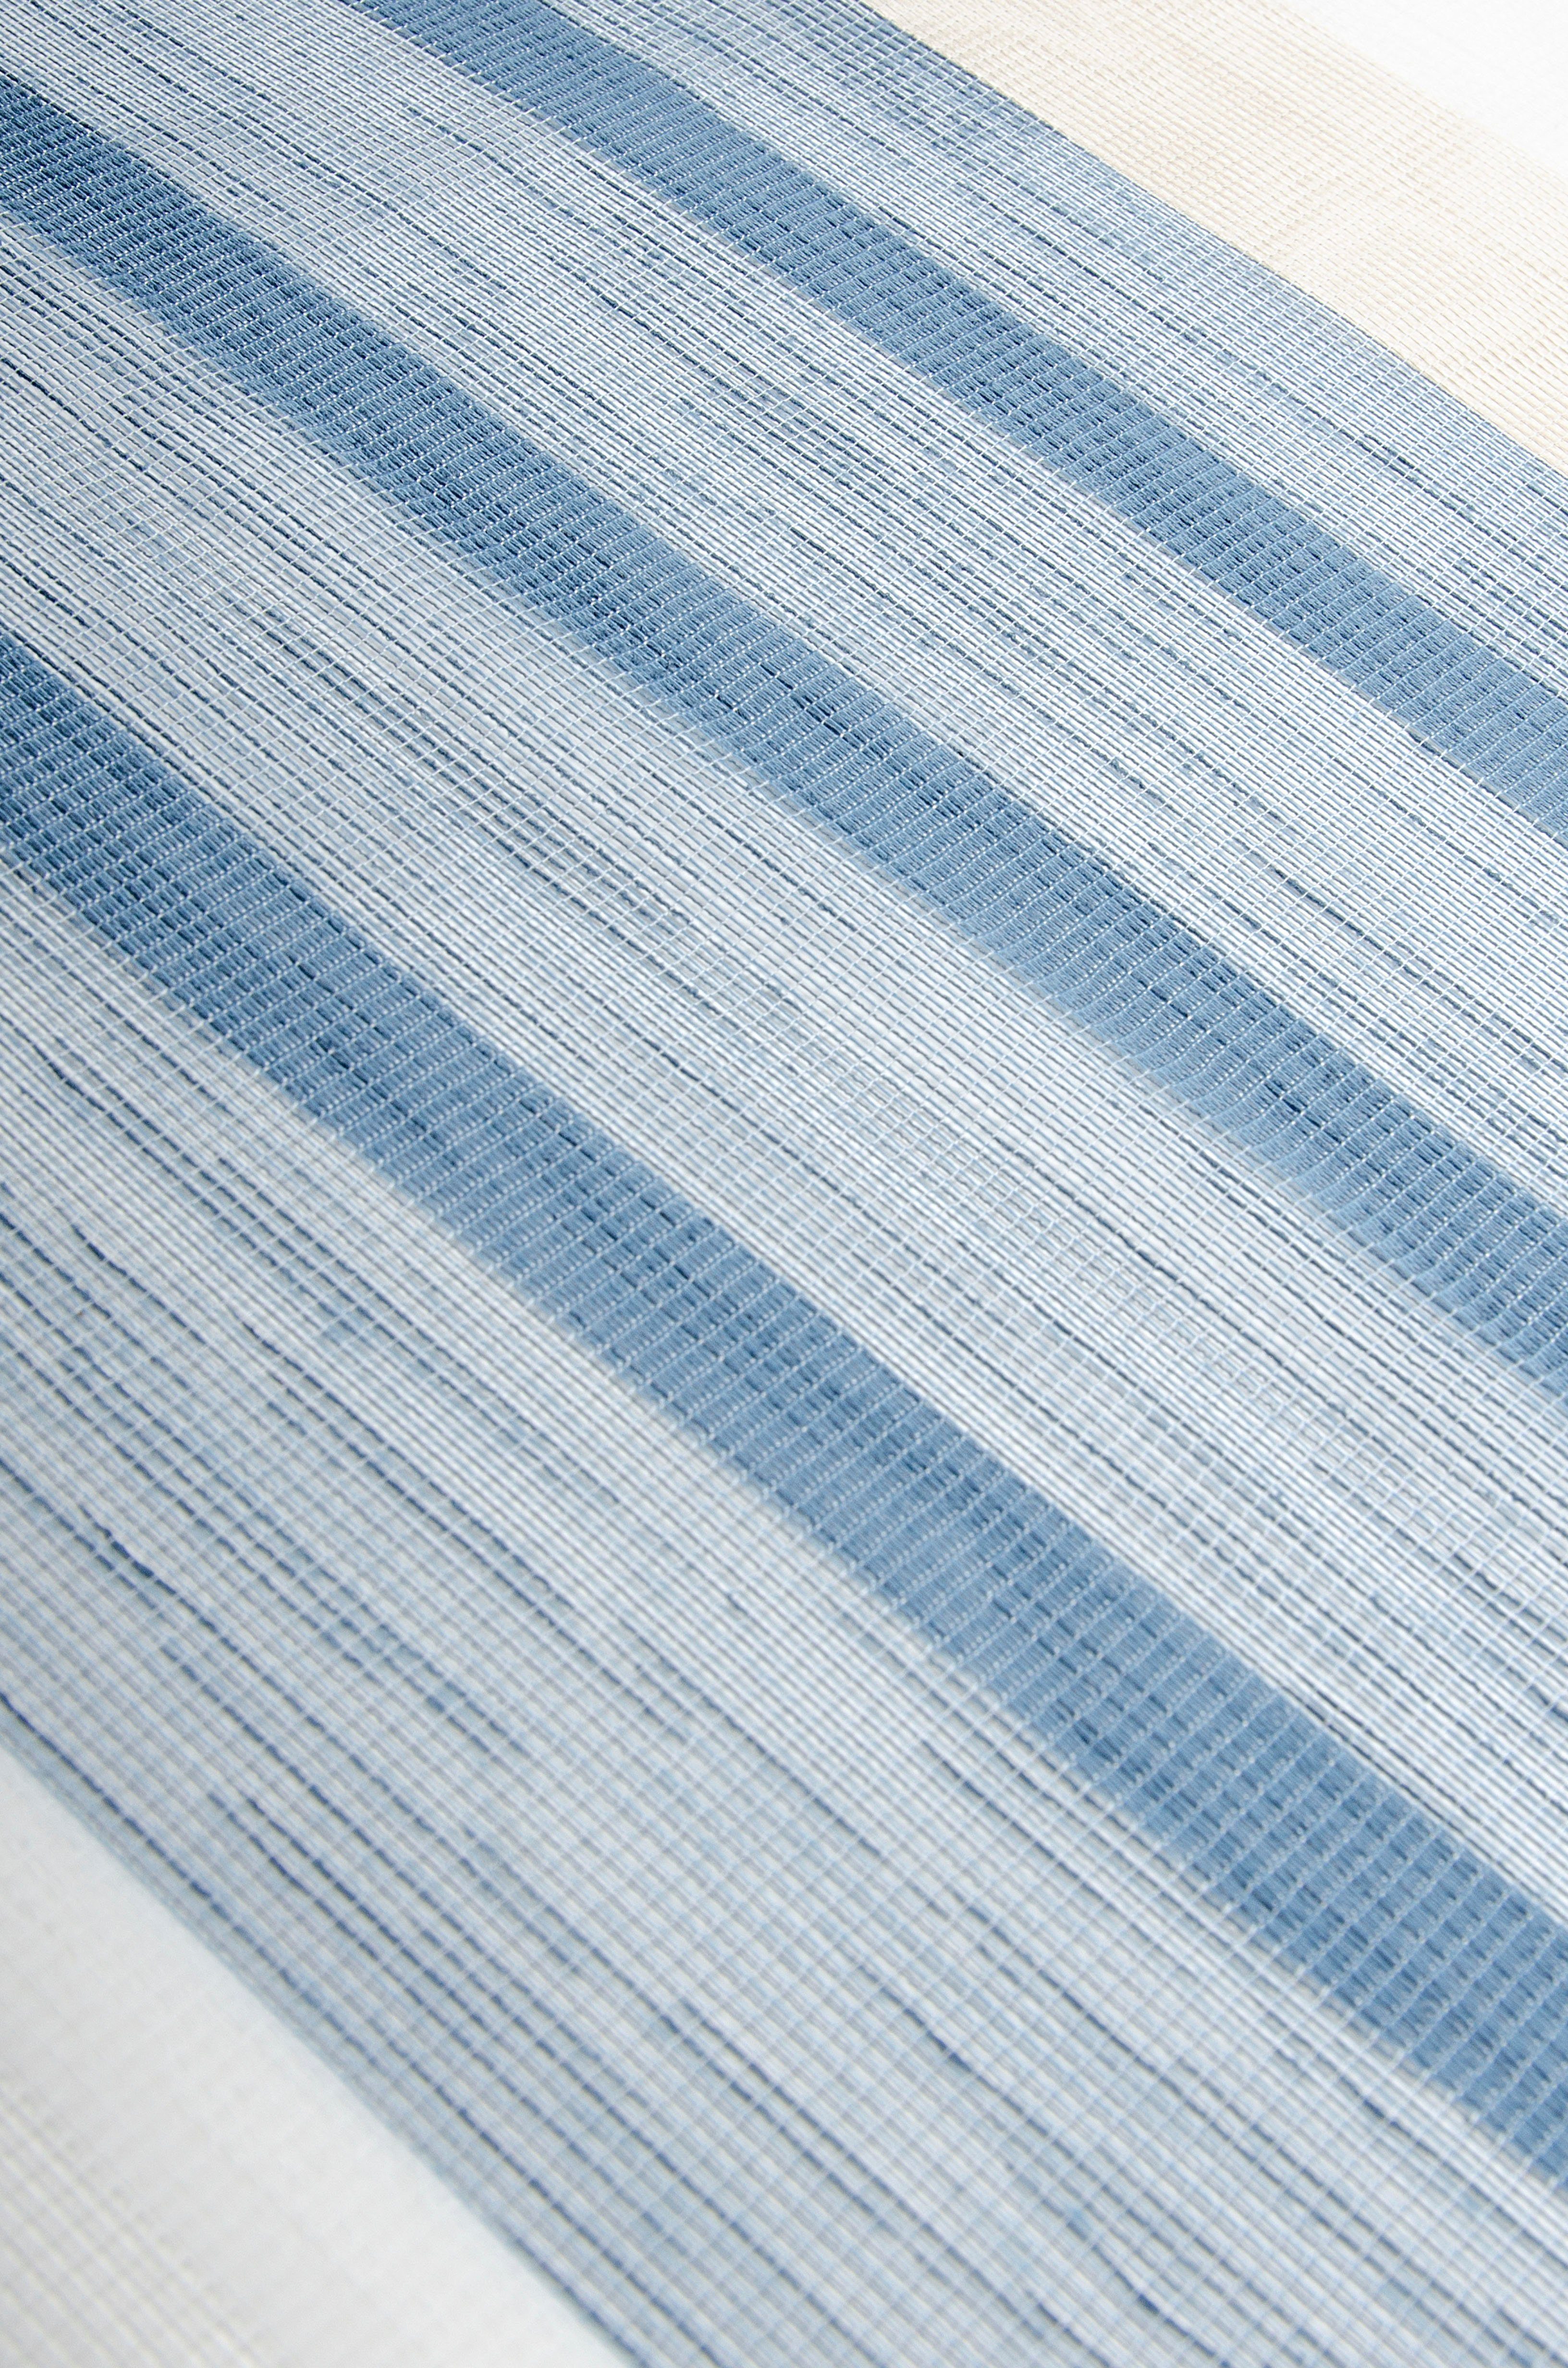 Vorhang Multifunktionsband (1 you!, im Querstreifen Abby, Neutex for St), Jacquard, wollweiß/blau Skandi-Look transparent,